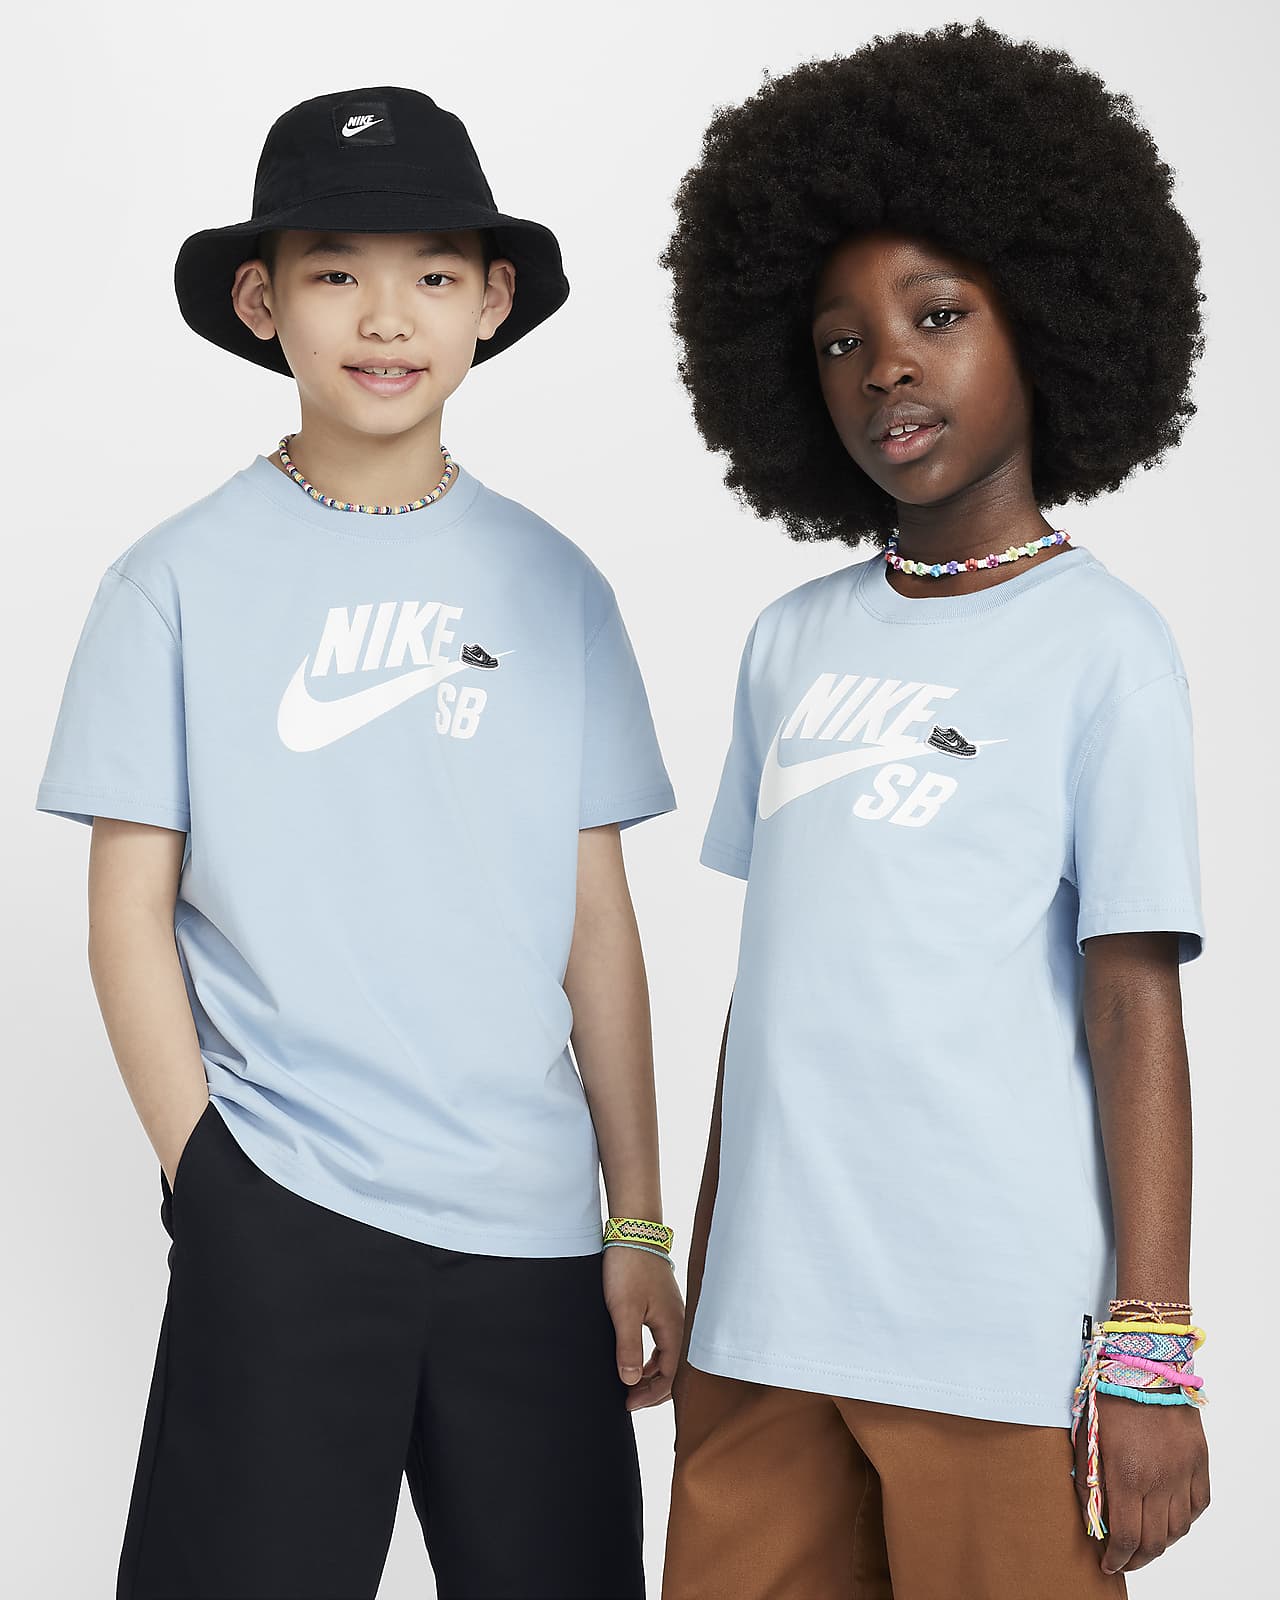 T-shirt Nike SB för ungdom